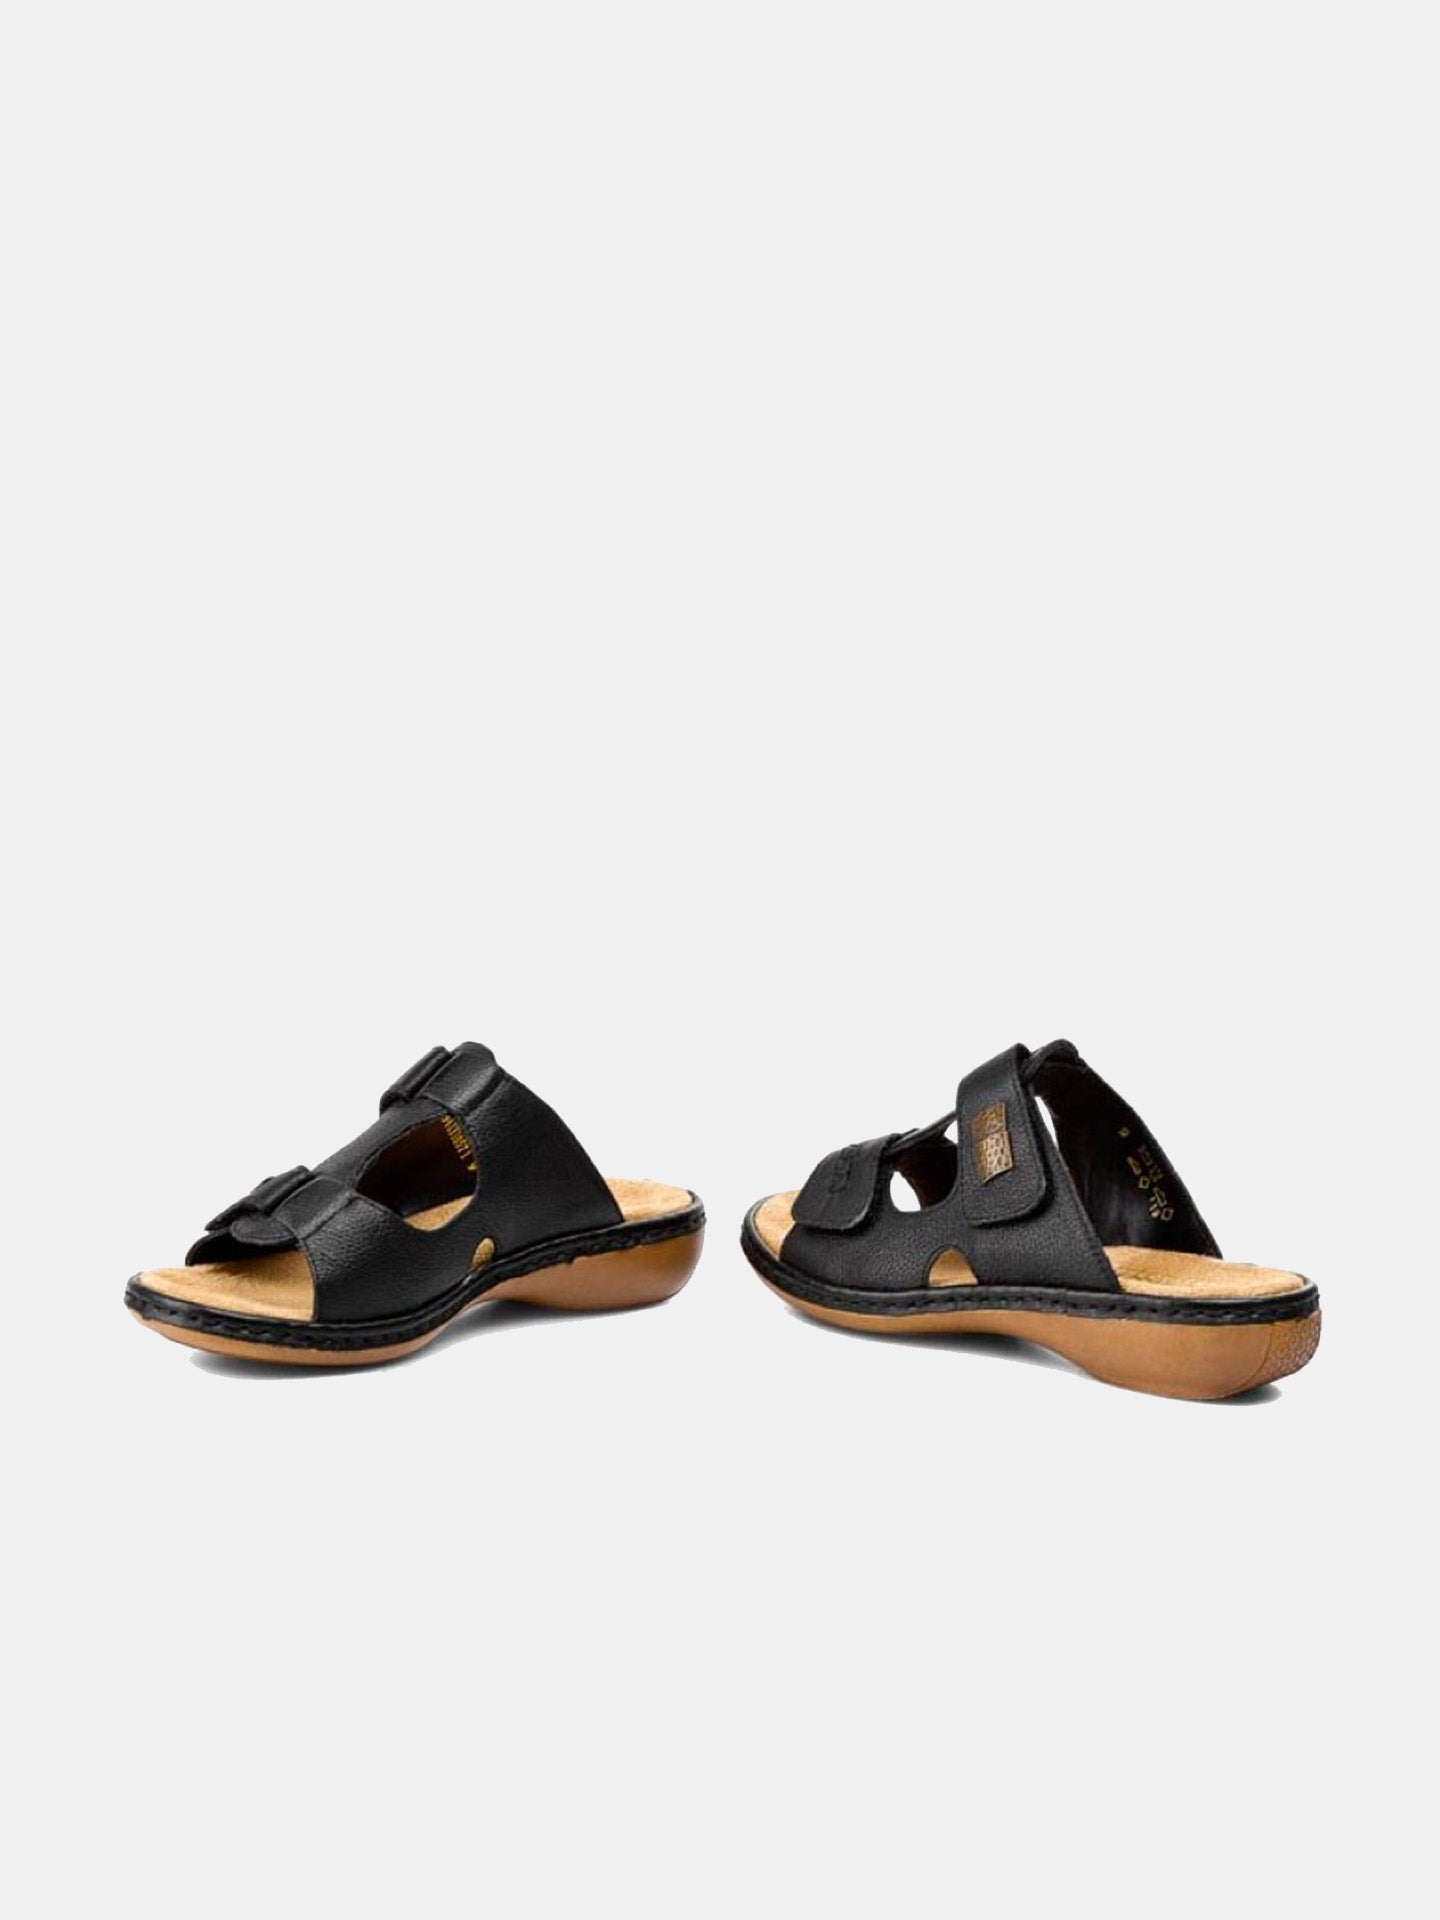 Rieker 65958-00 Women's Slider Sandals